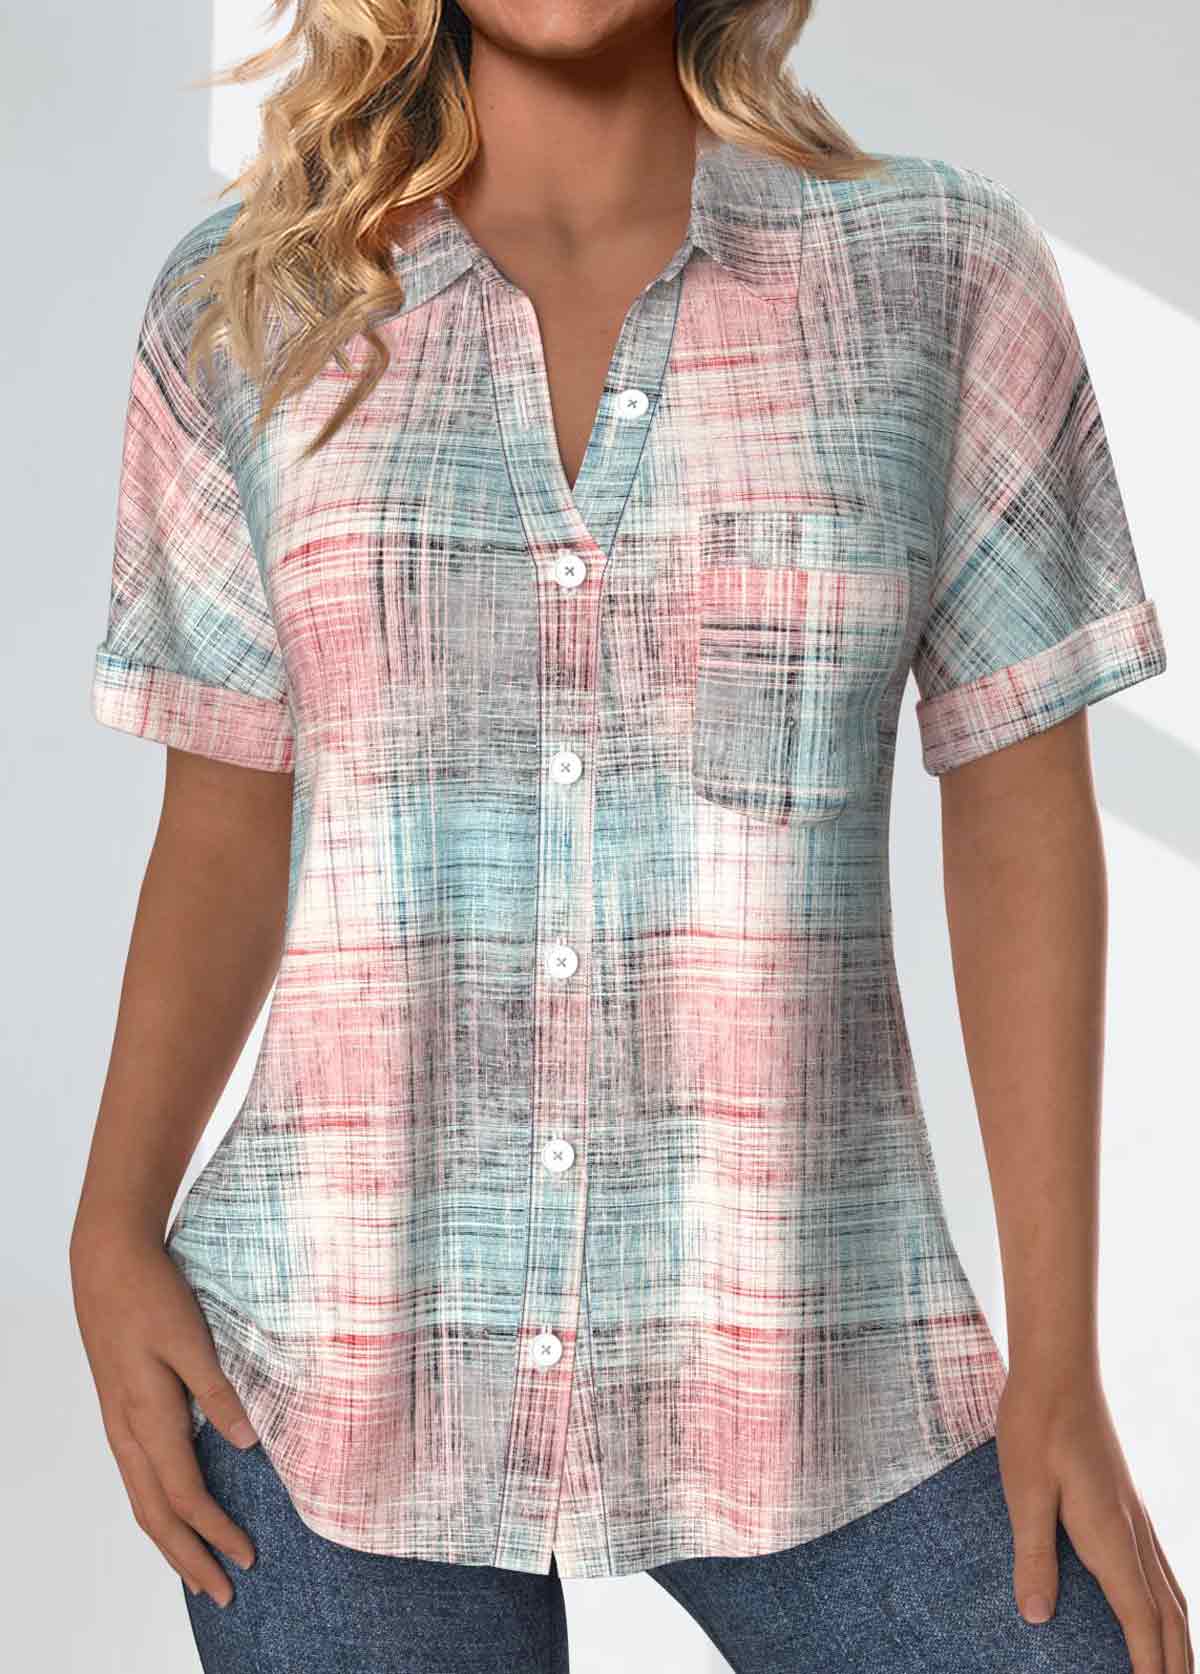 ROTITA Pocket Plaid Light Pink Shirt Collar Short Sleeve Blouse